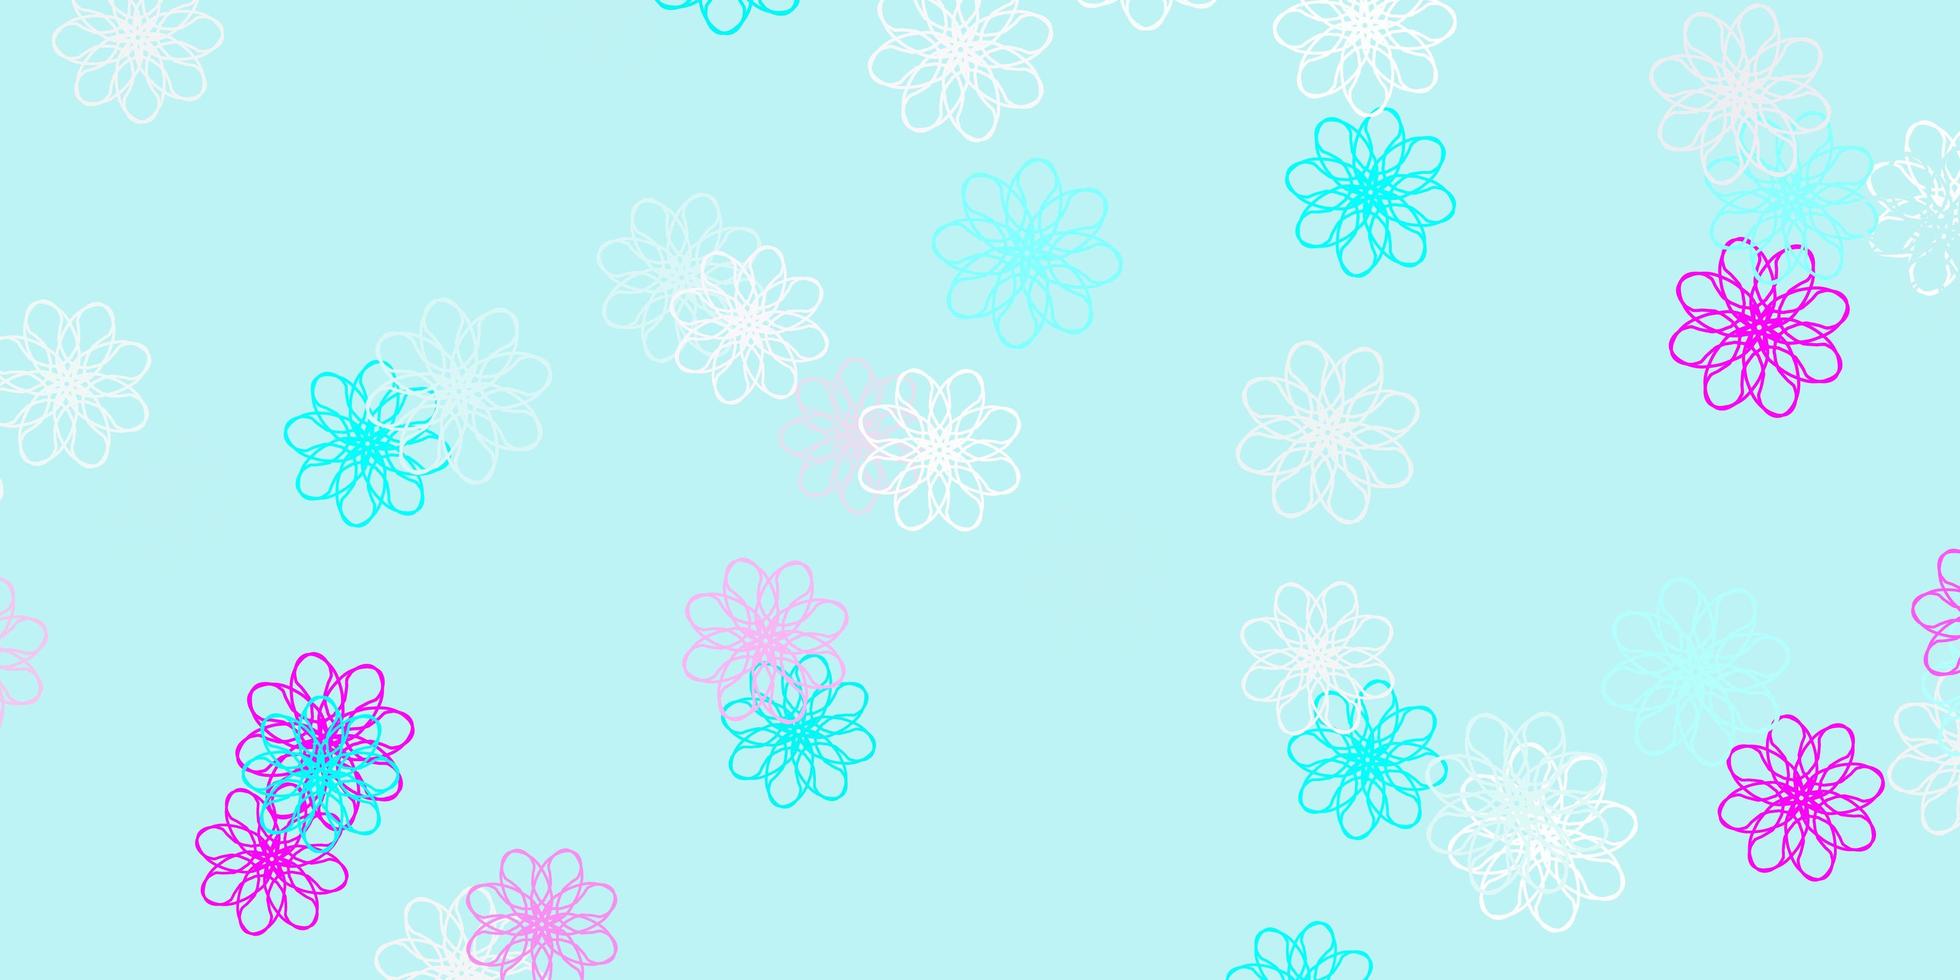 ljusrosa blå doodle bakgrund med blommor vektor